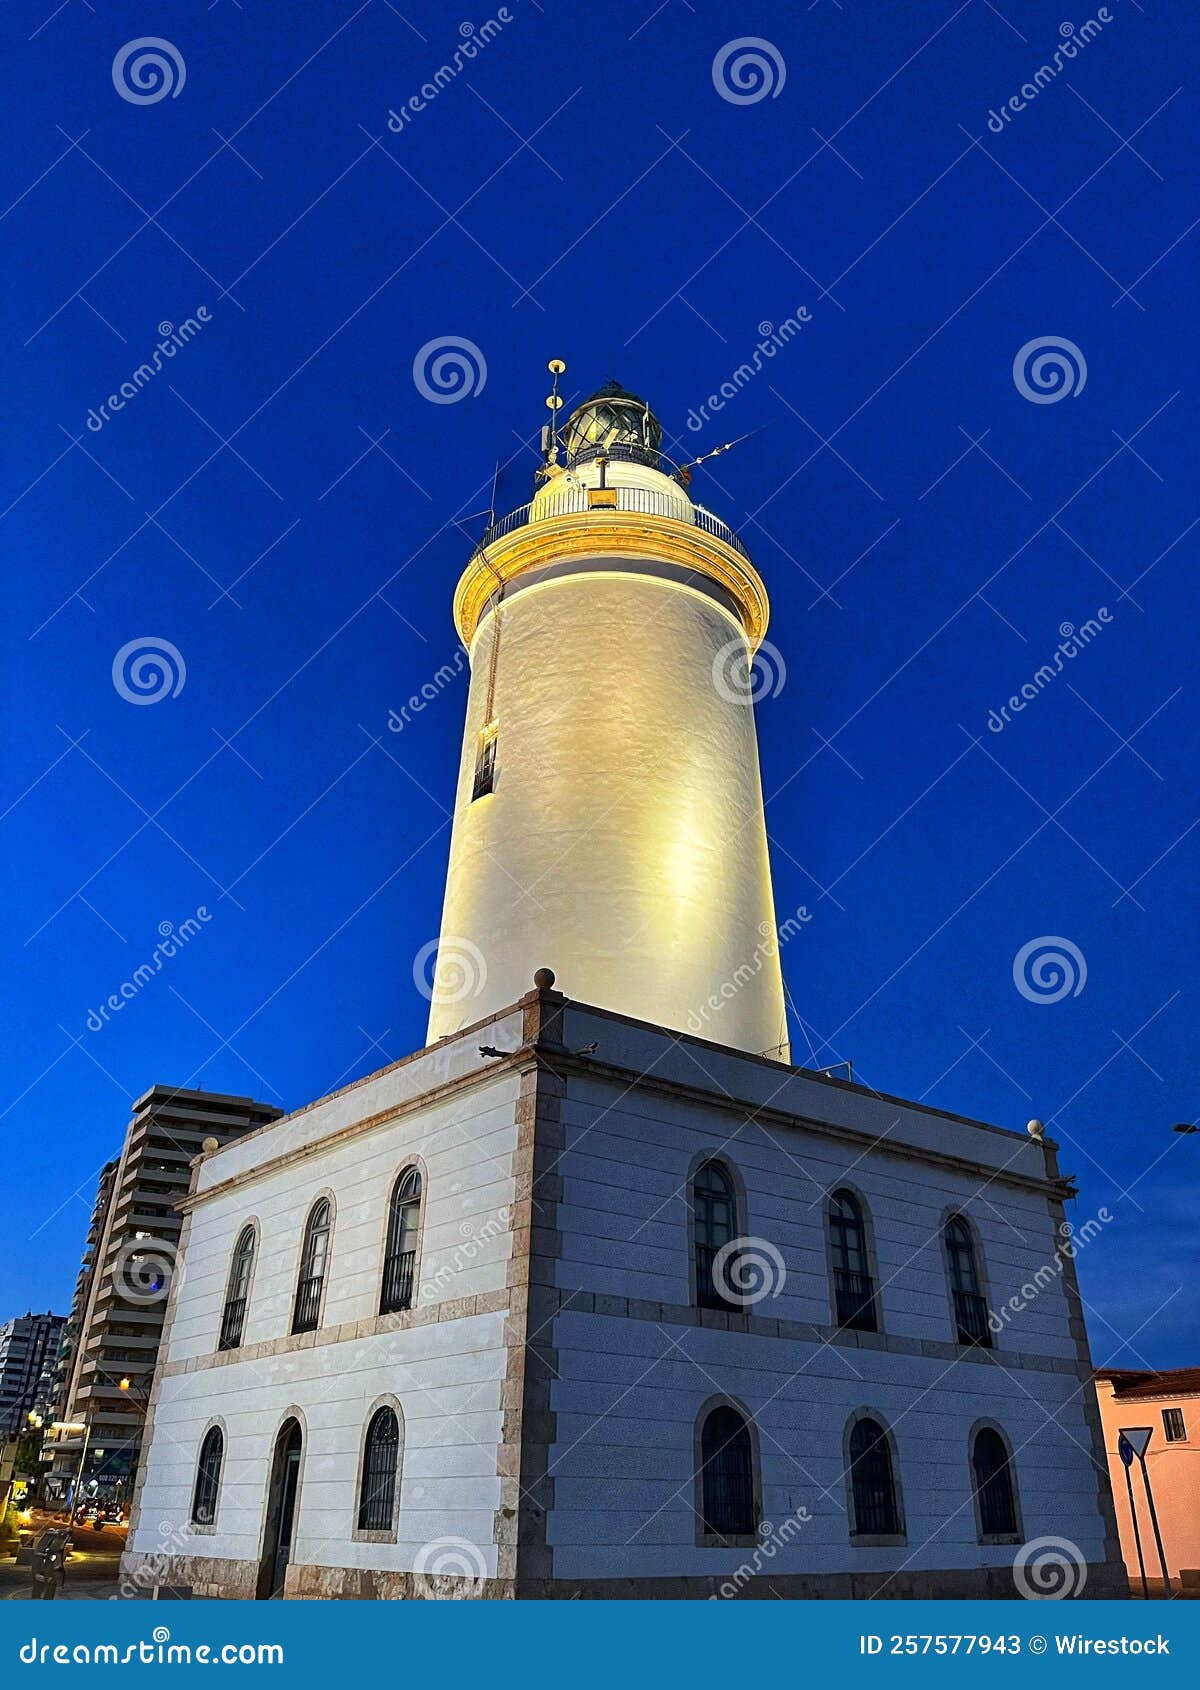 low angle shot of la farola lighthouse in malaga, spain during nighttime